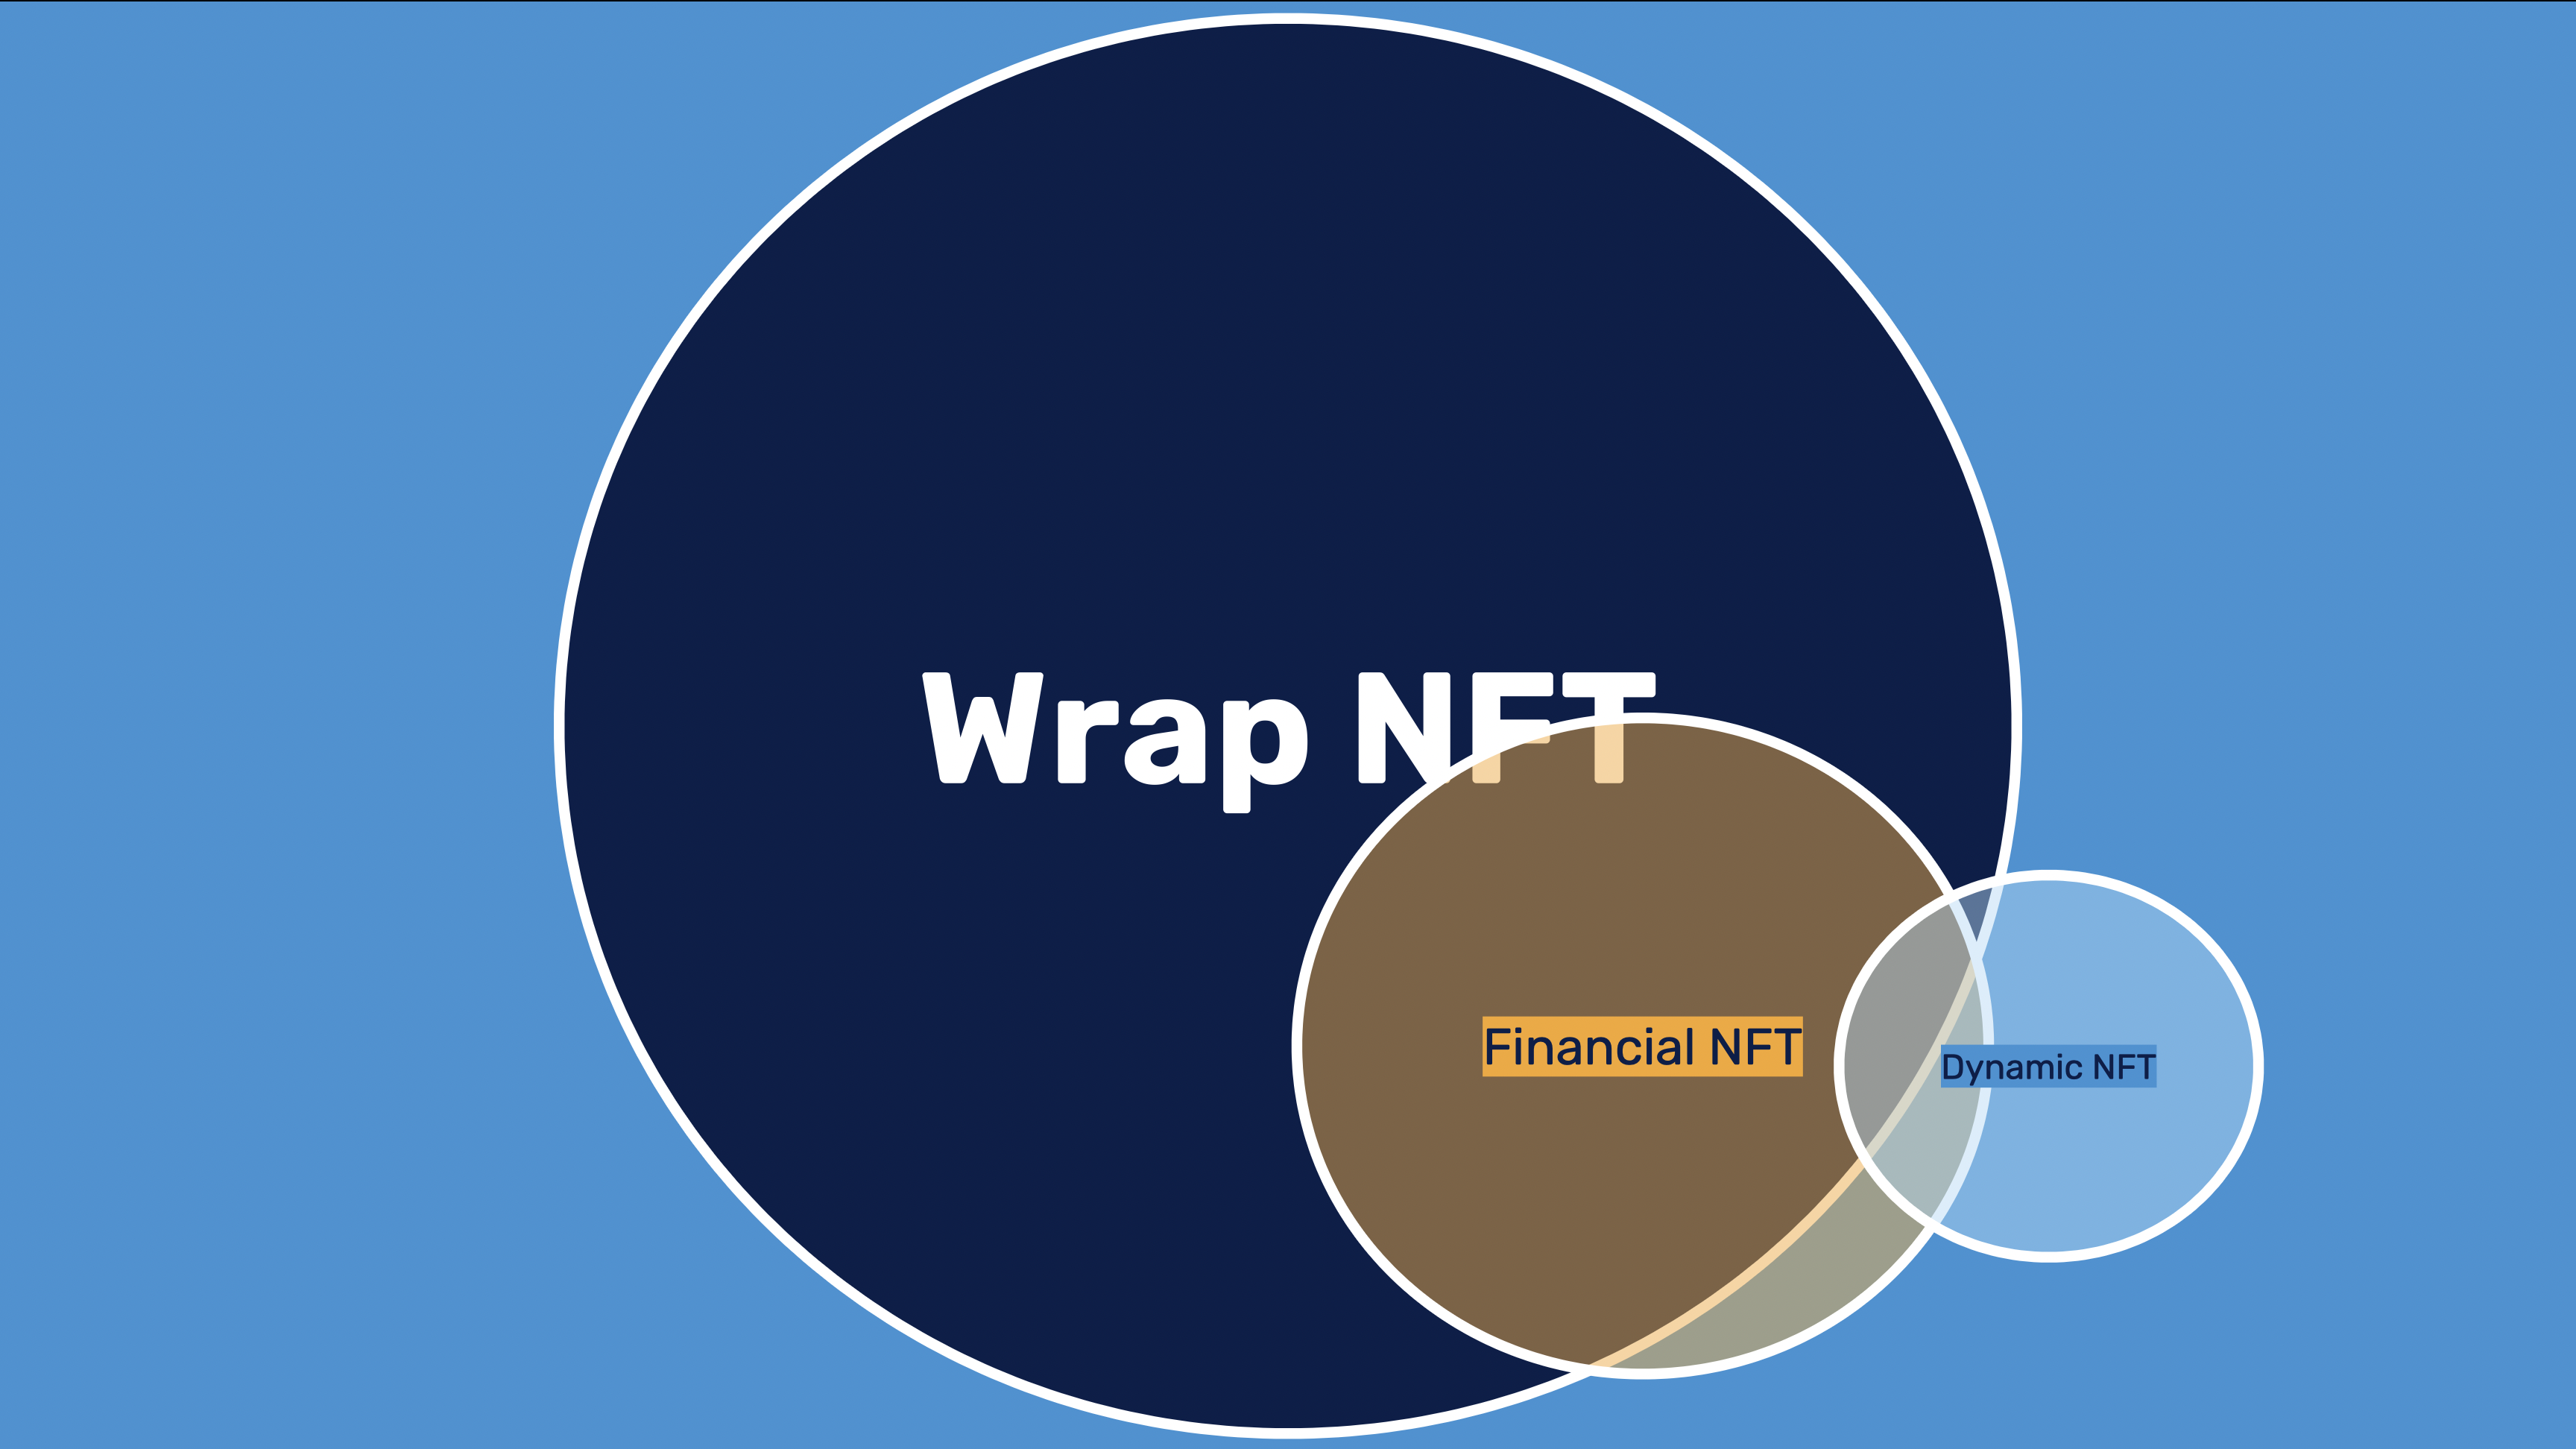 wrap NFT. Financial NFT. Dynamic NFT. NFT 2.0